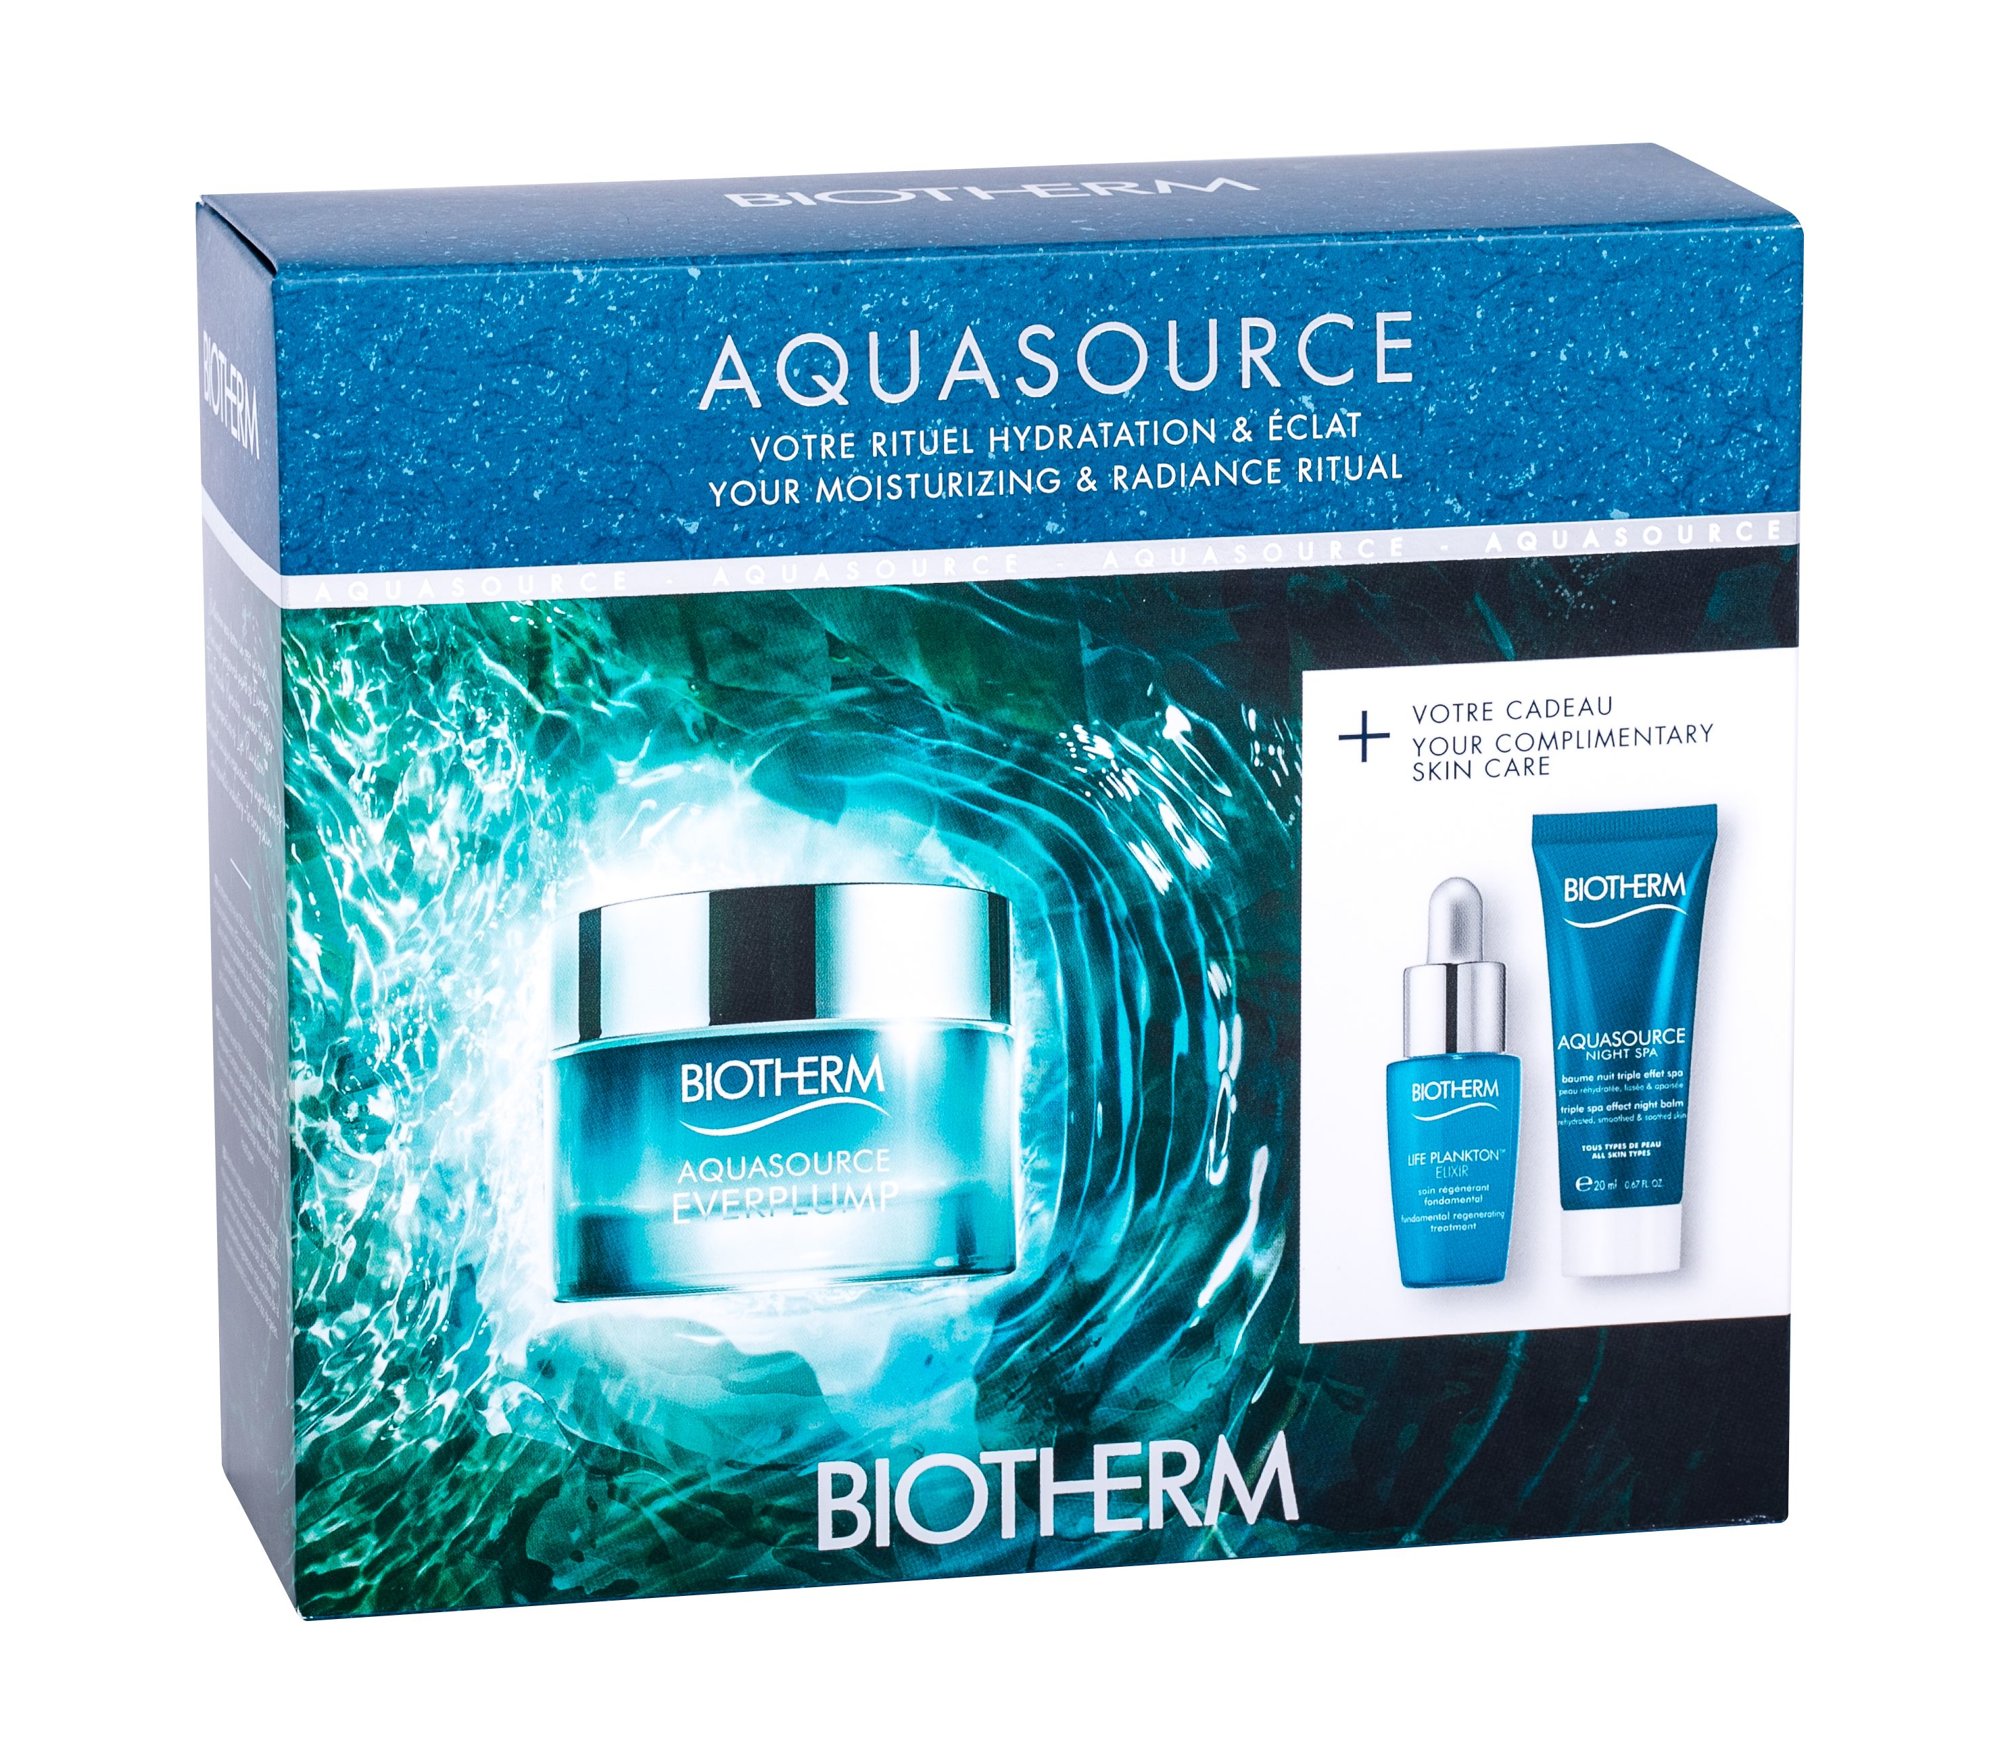 Biotherm Aquasource 50ml Daily Facial Care 50 ml + Facial Serum Life Plankton 7 ml + Aquasource Night Spa 20 ml veido gelis Rinkinys